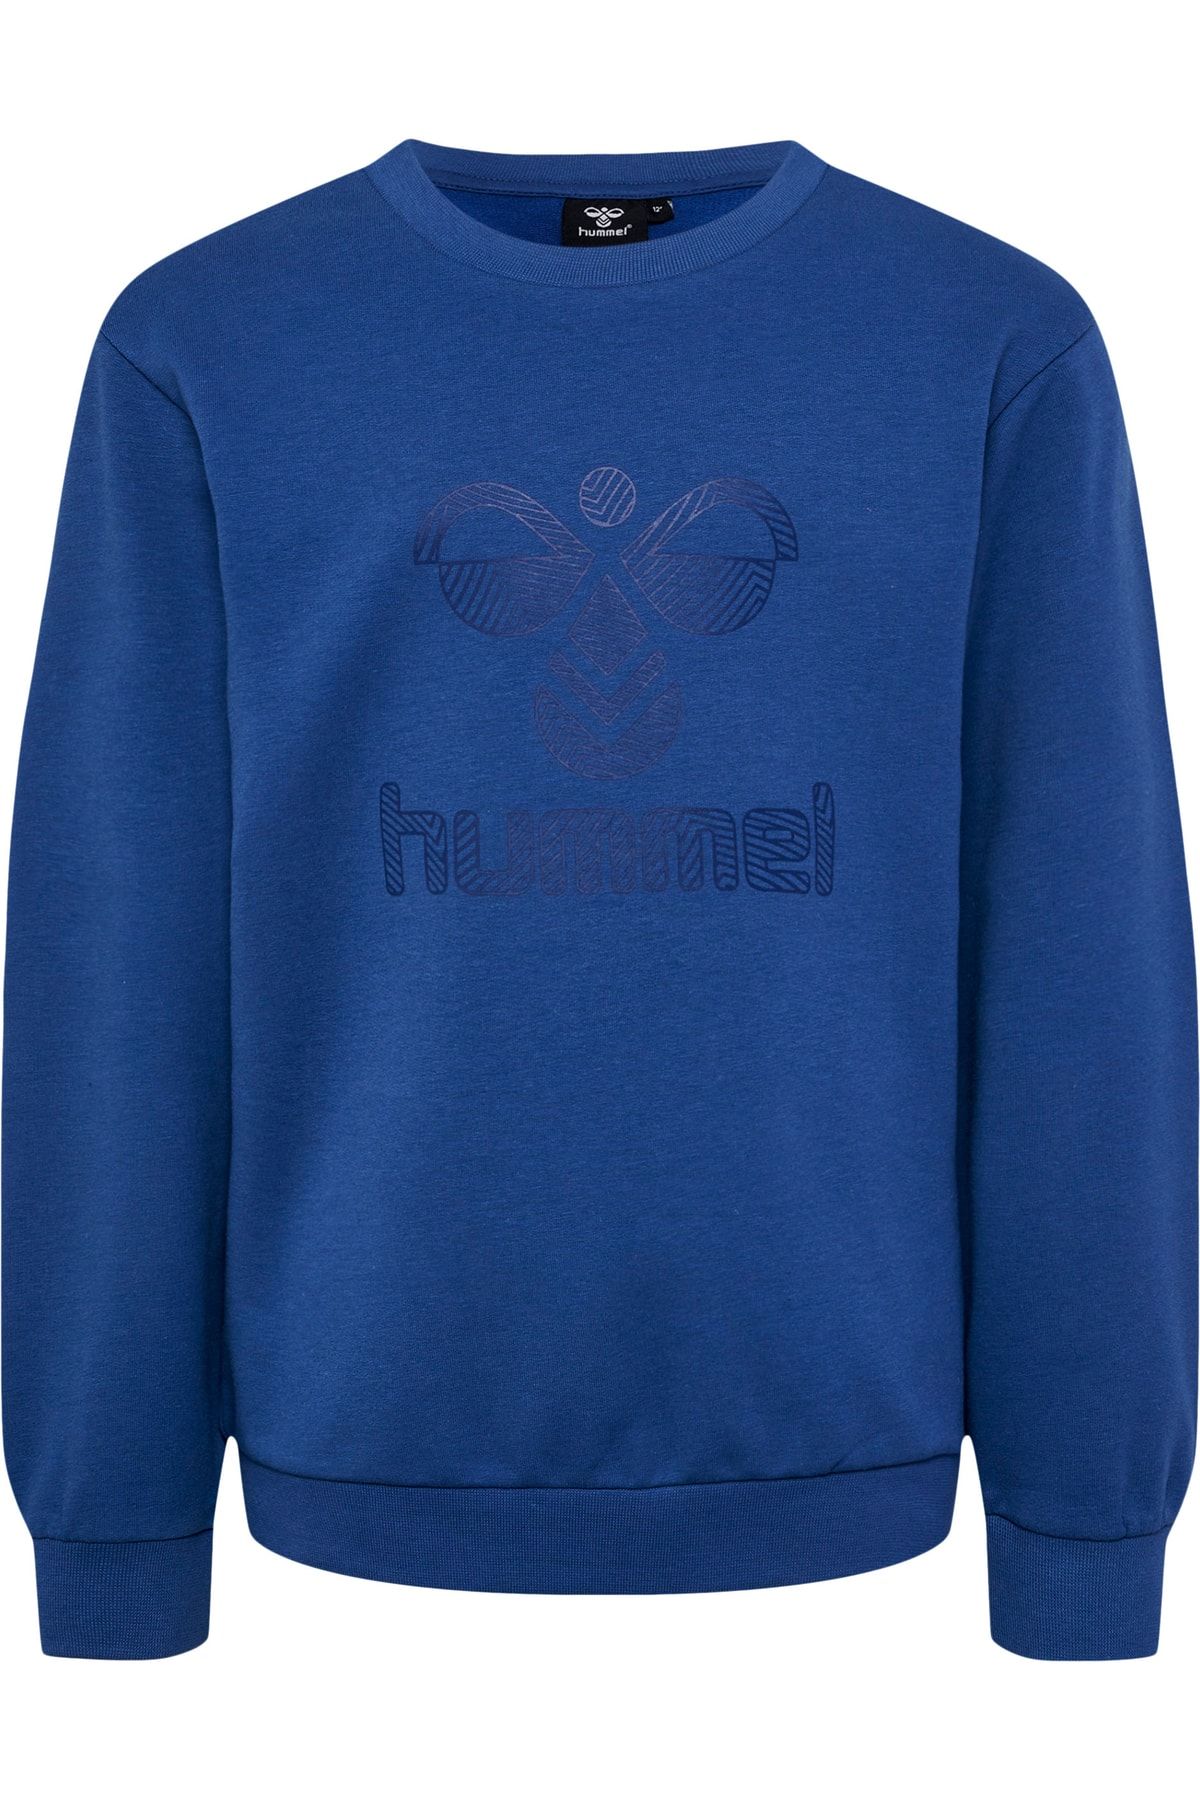 Trendyol Sweatshirt - Fit Regular Blau HUMMEL - -